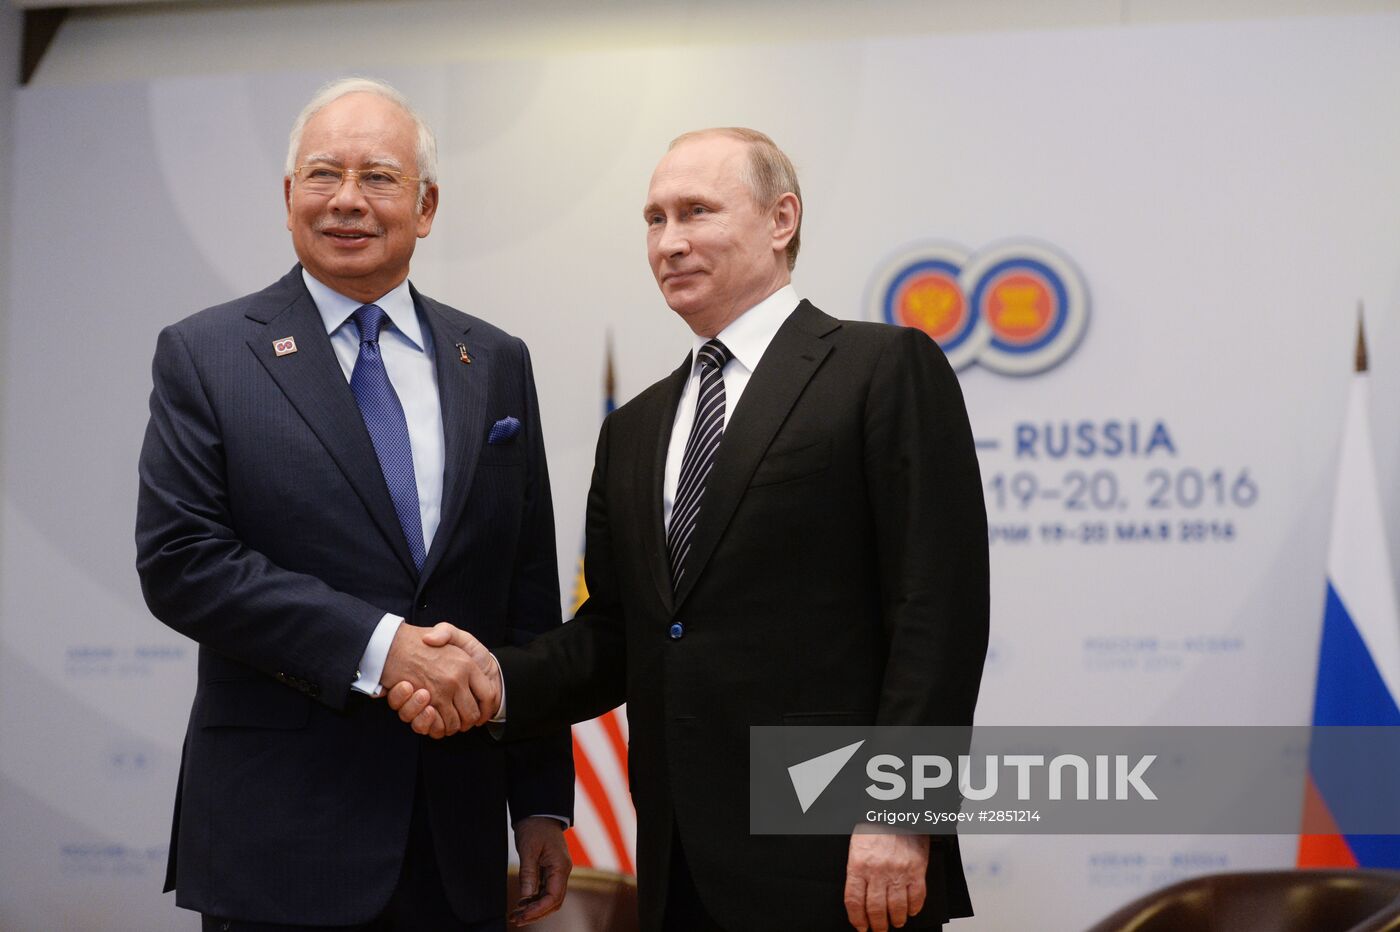 Vladimir Putin's bilateral meeting with Prime Minister of Malaysia Najib Tun Razak